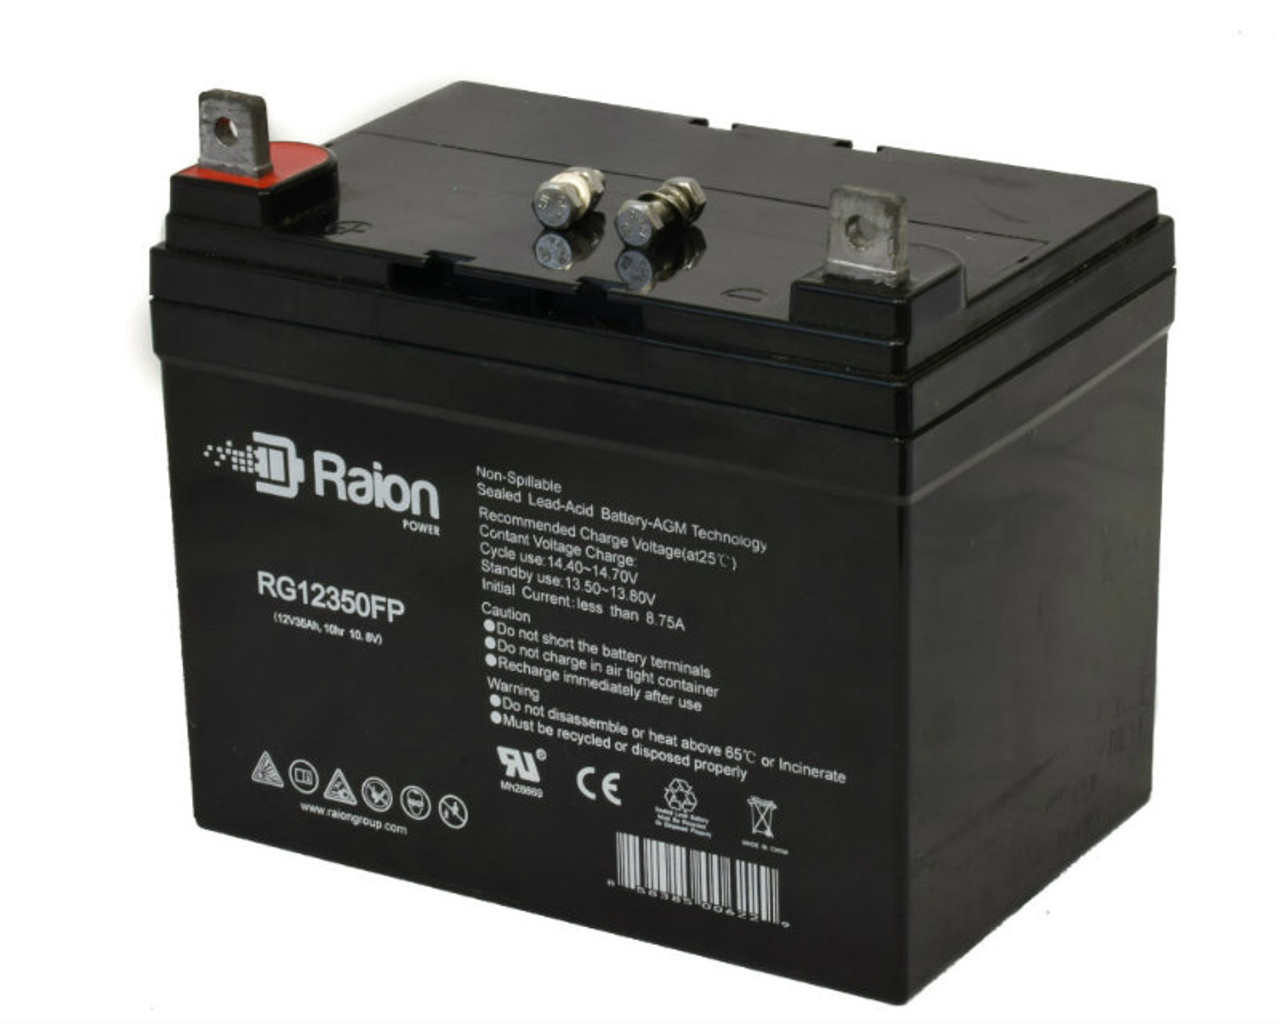 Raion Power Replacement 12V 35Ah RG12350FP Battery for Narada 6-FM-33